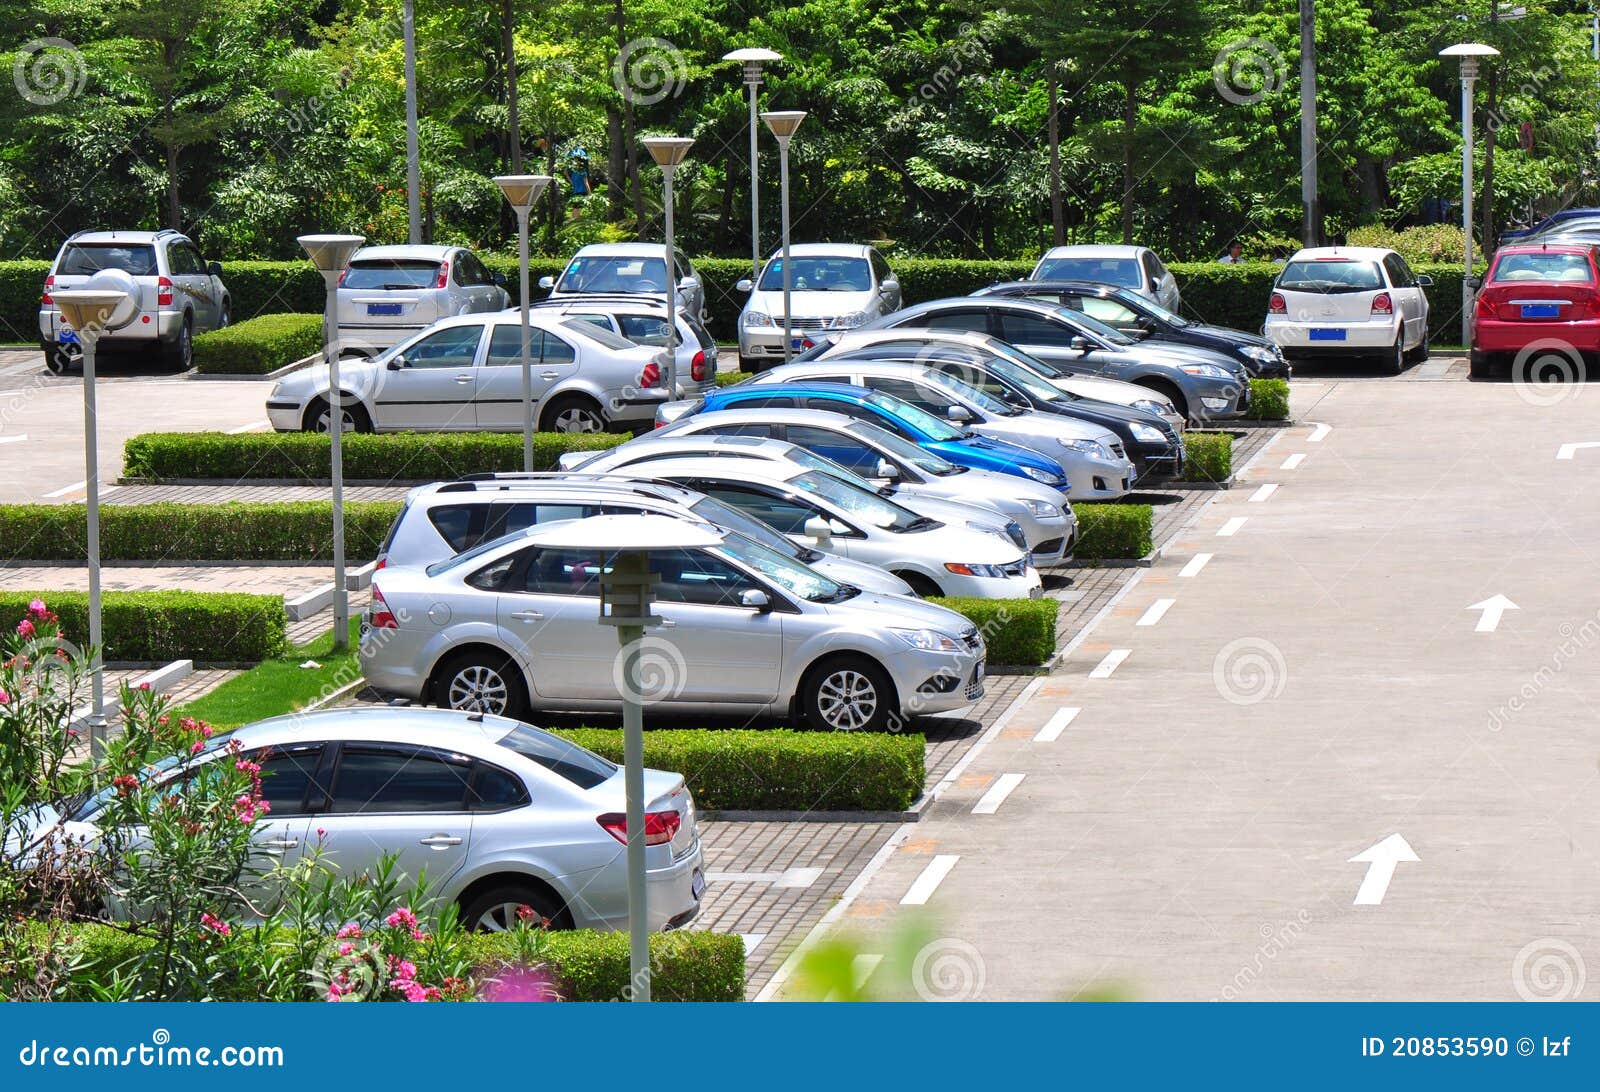 car parking lot business plan